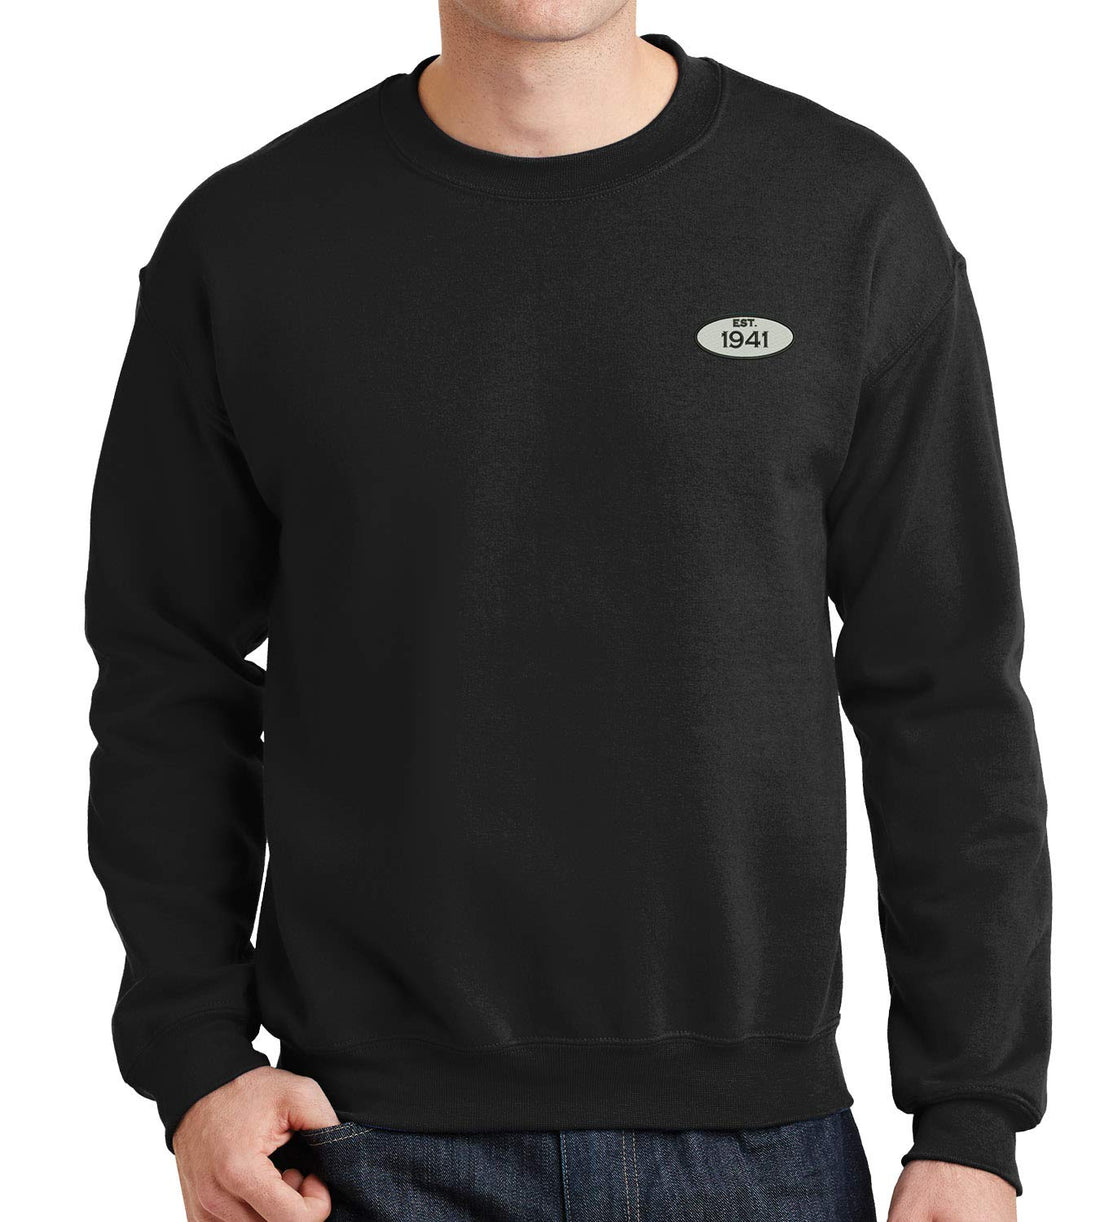 Trendy Apparel Shop Established 1941 Embroidered Crewneck Sweatshirt - Black - 2XL